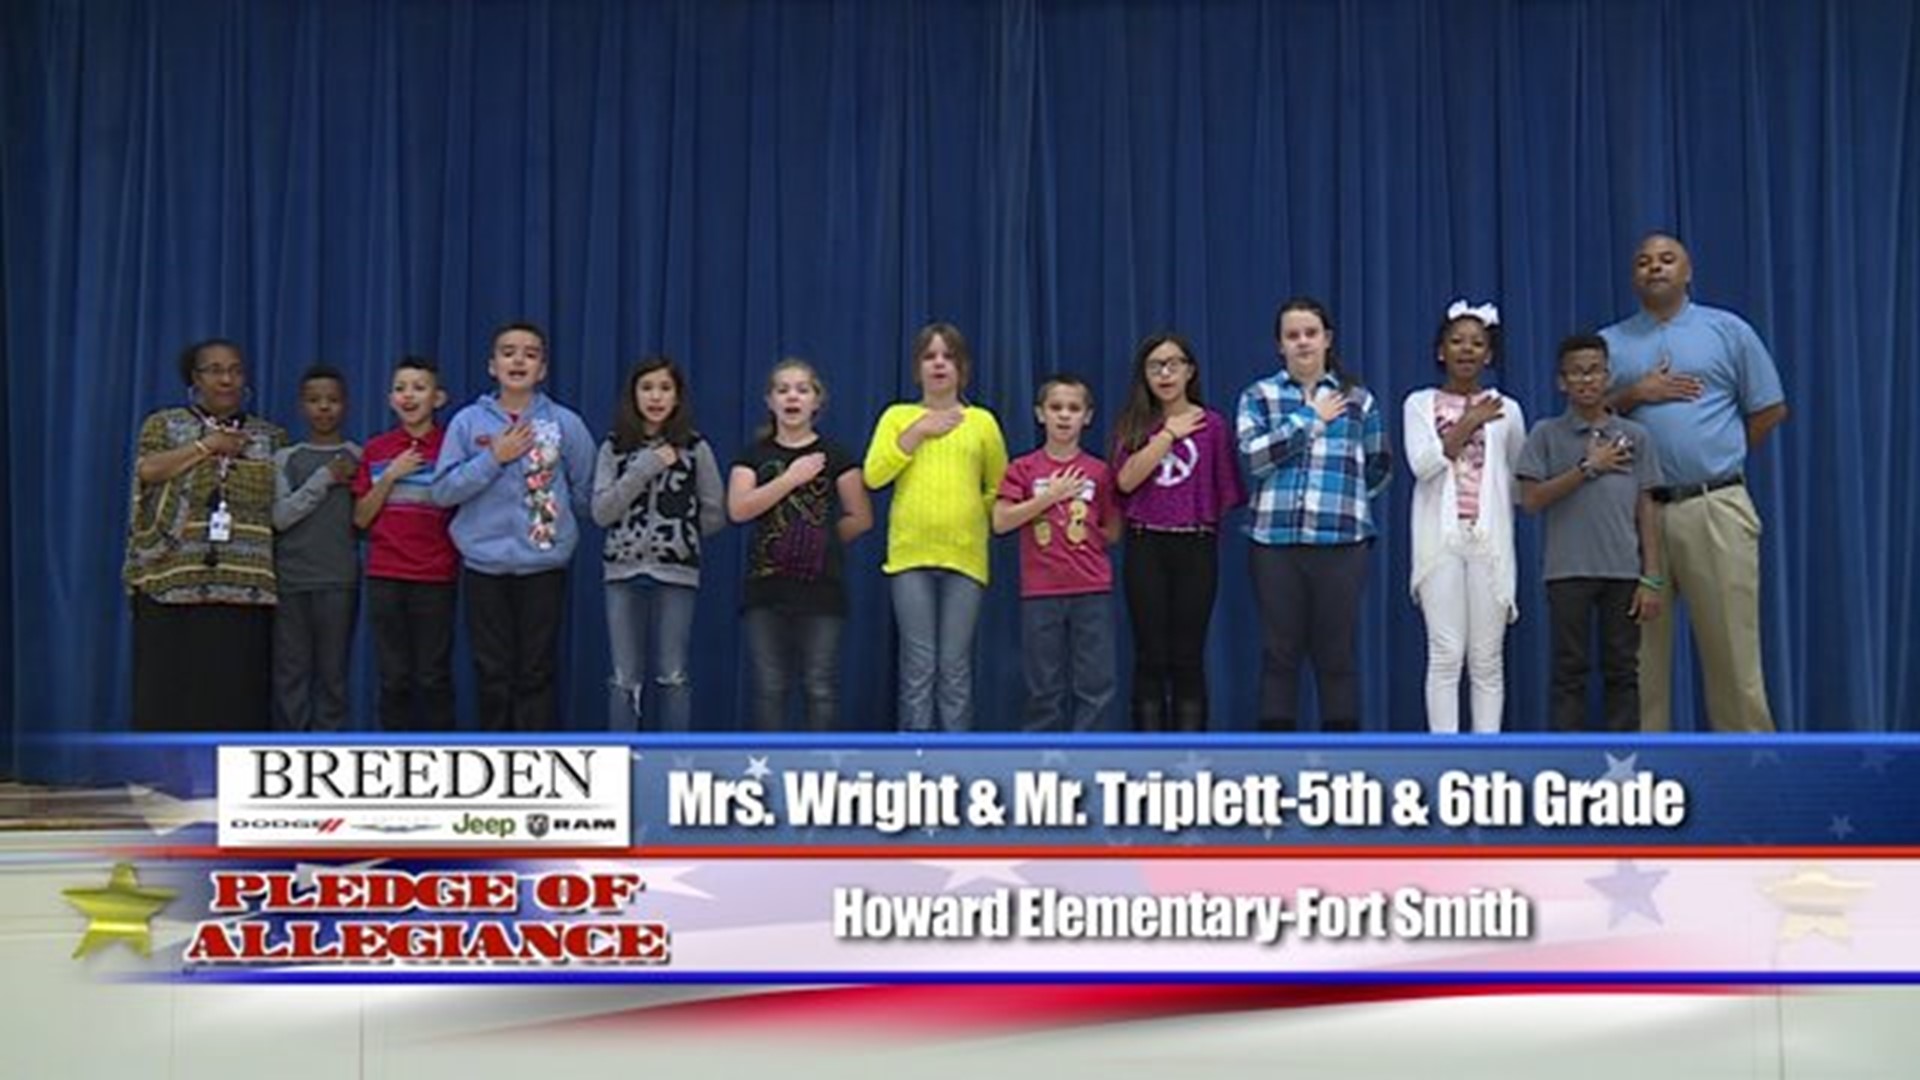 Howard Elementary, Fort Smith - Mrs. Wright & Mr. Triplett - 5th & 6th Grade